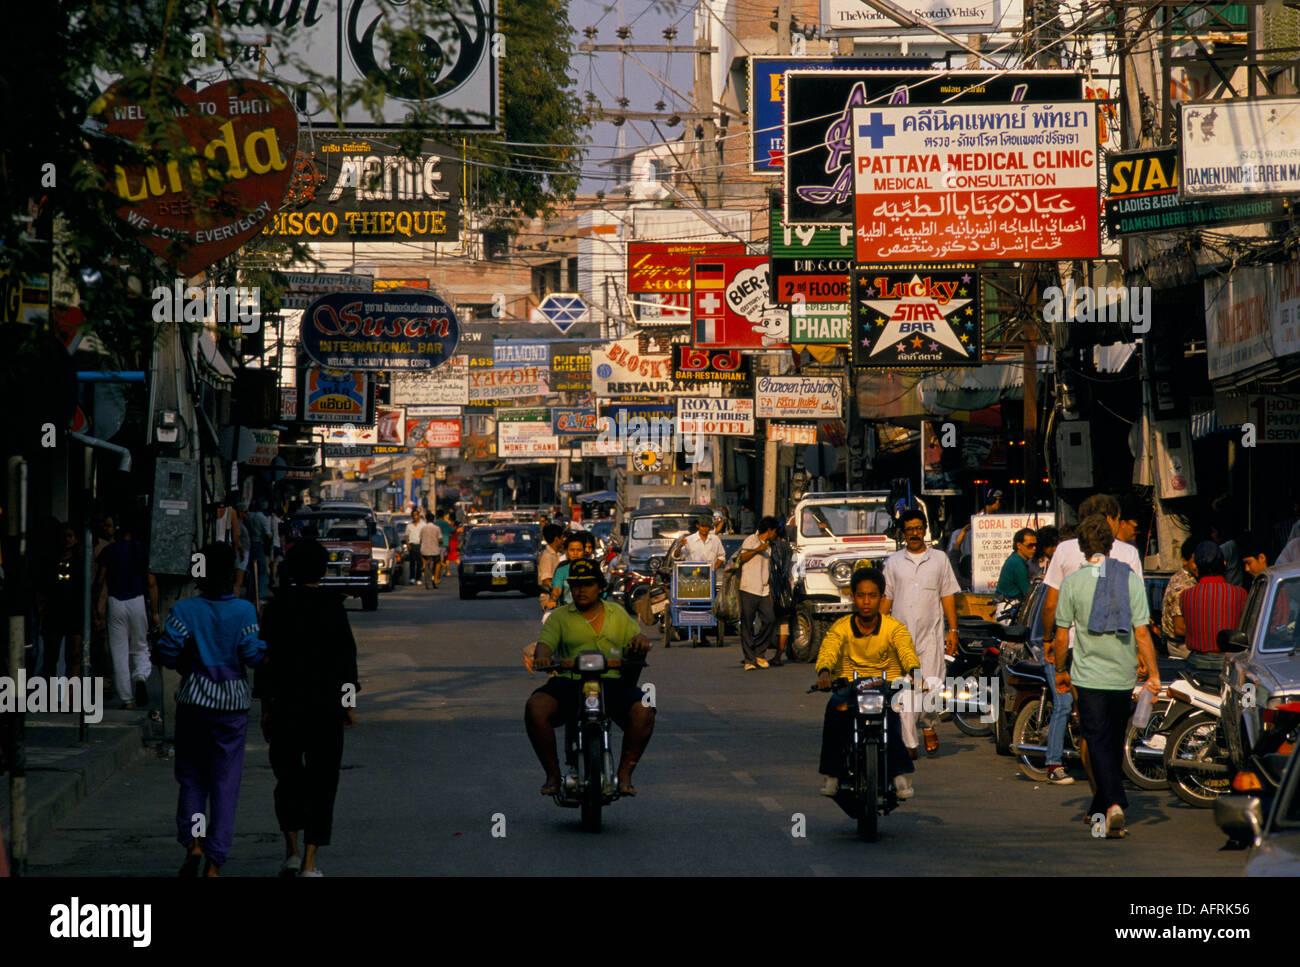 Pattaya Thailand. Daily life busy bussing street scene 1990s HOMER SYKES. Stock Photo